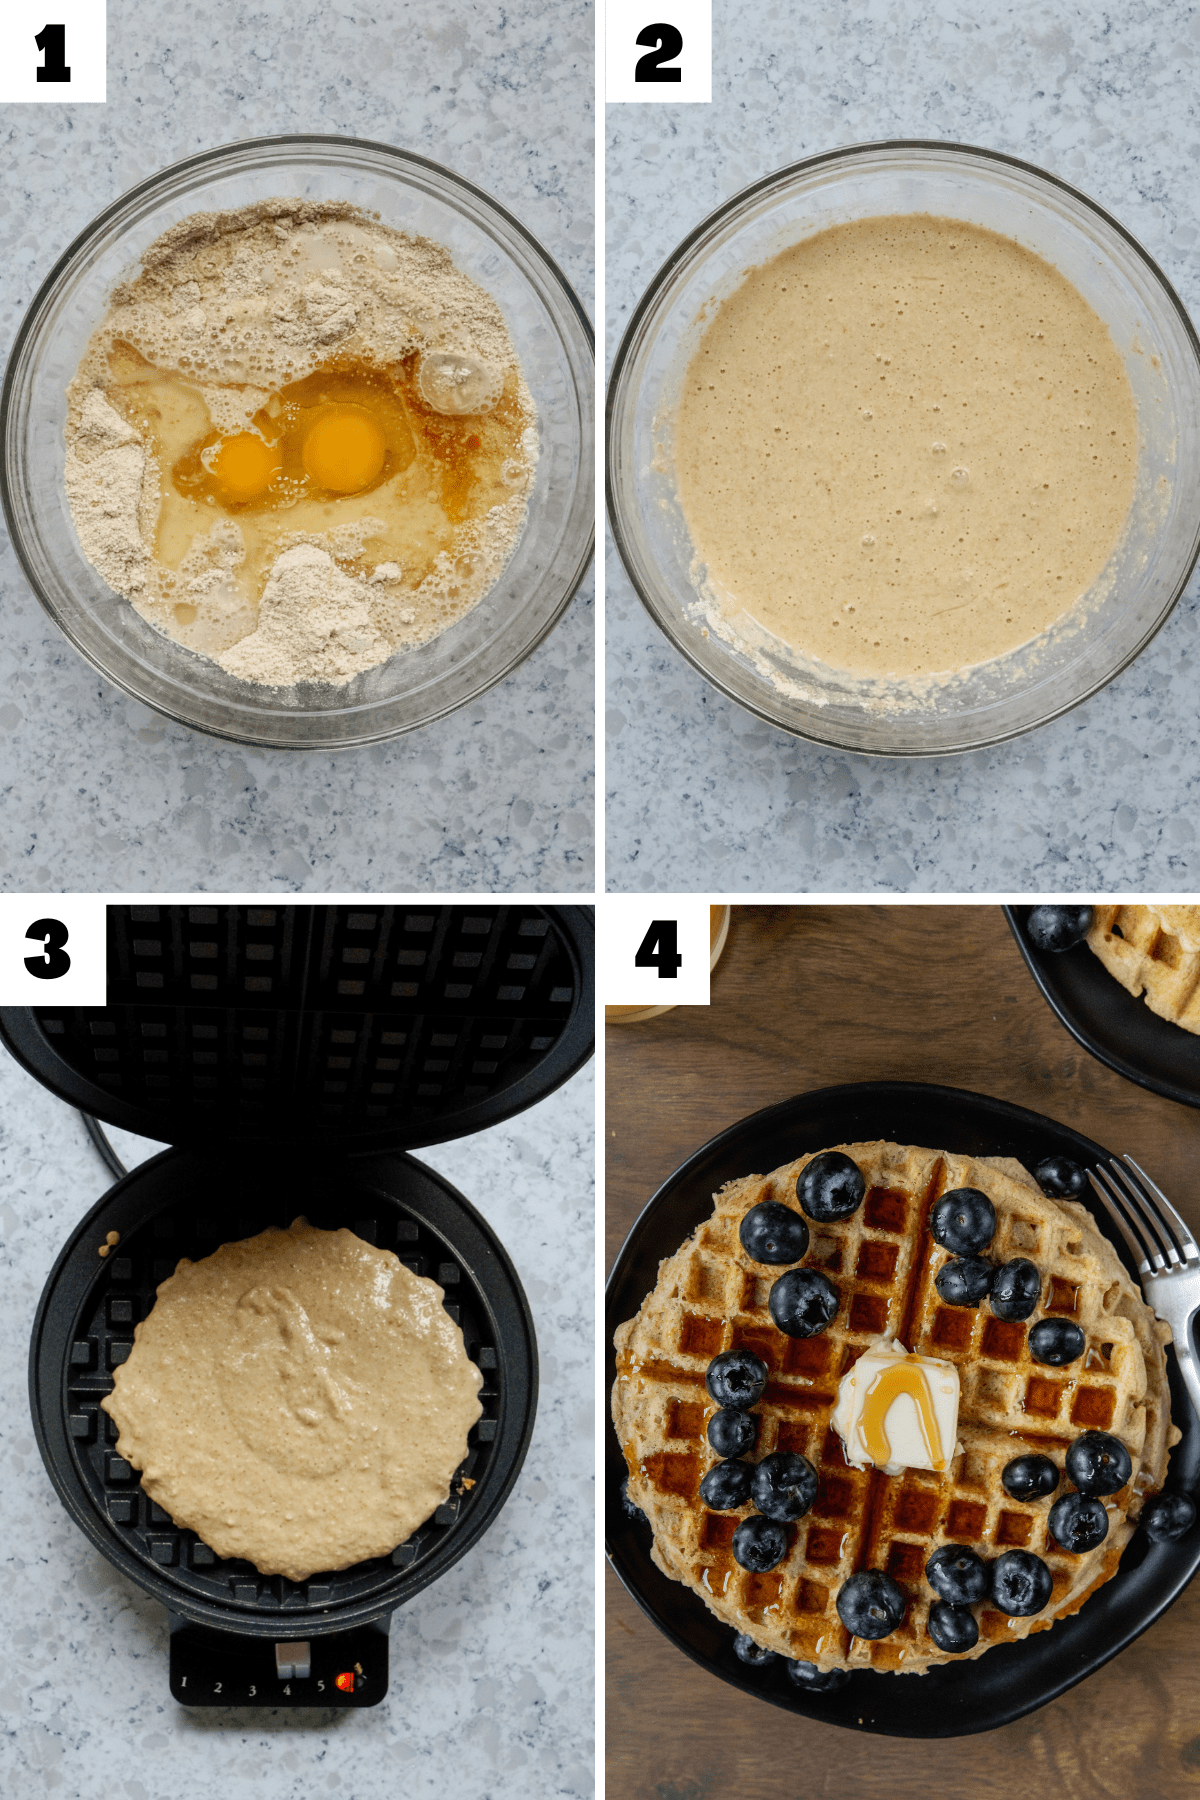 Steps for making oat waffles